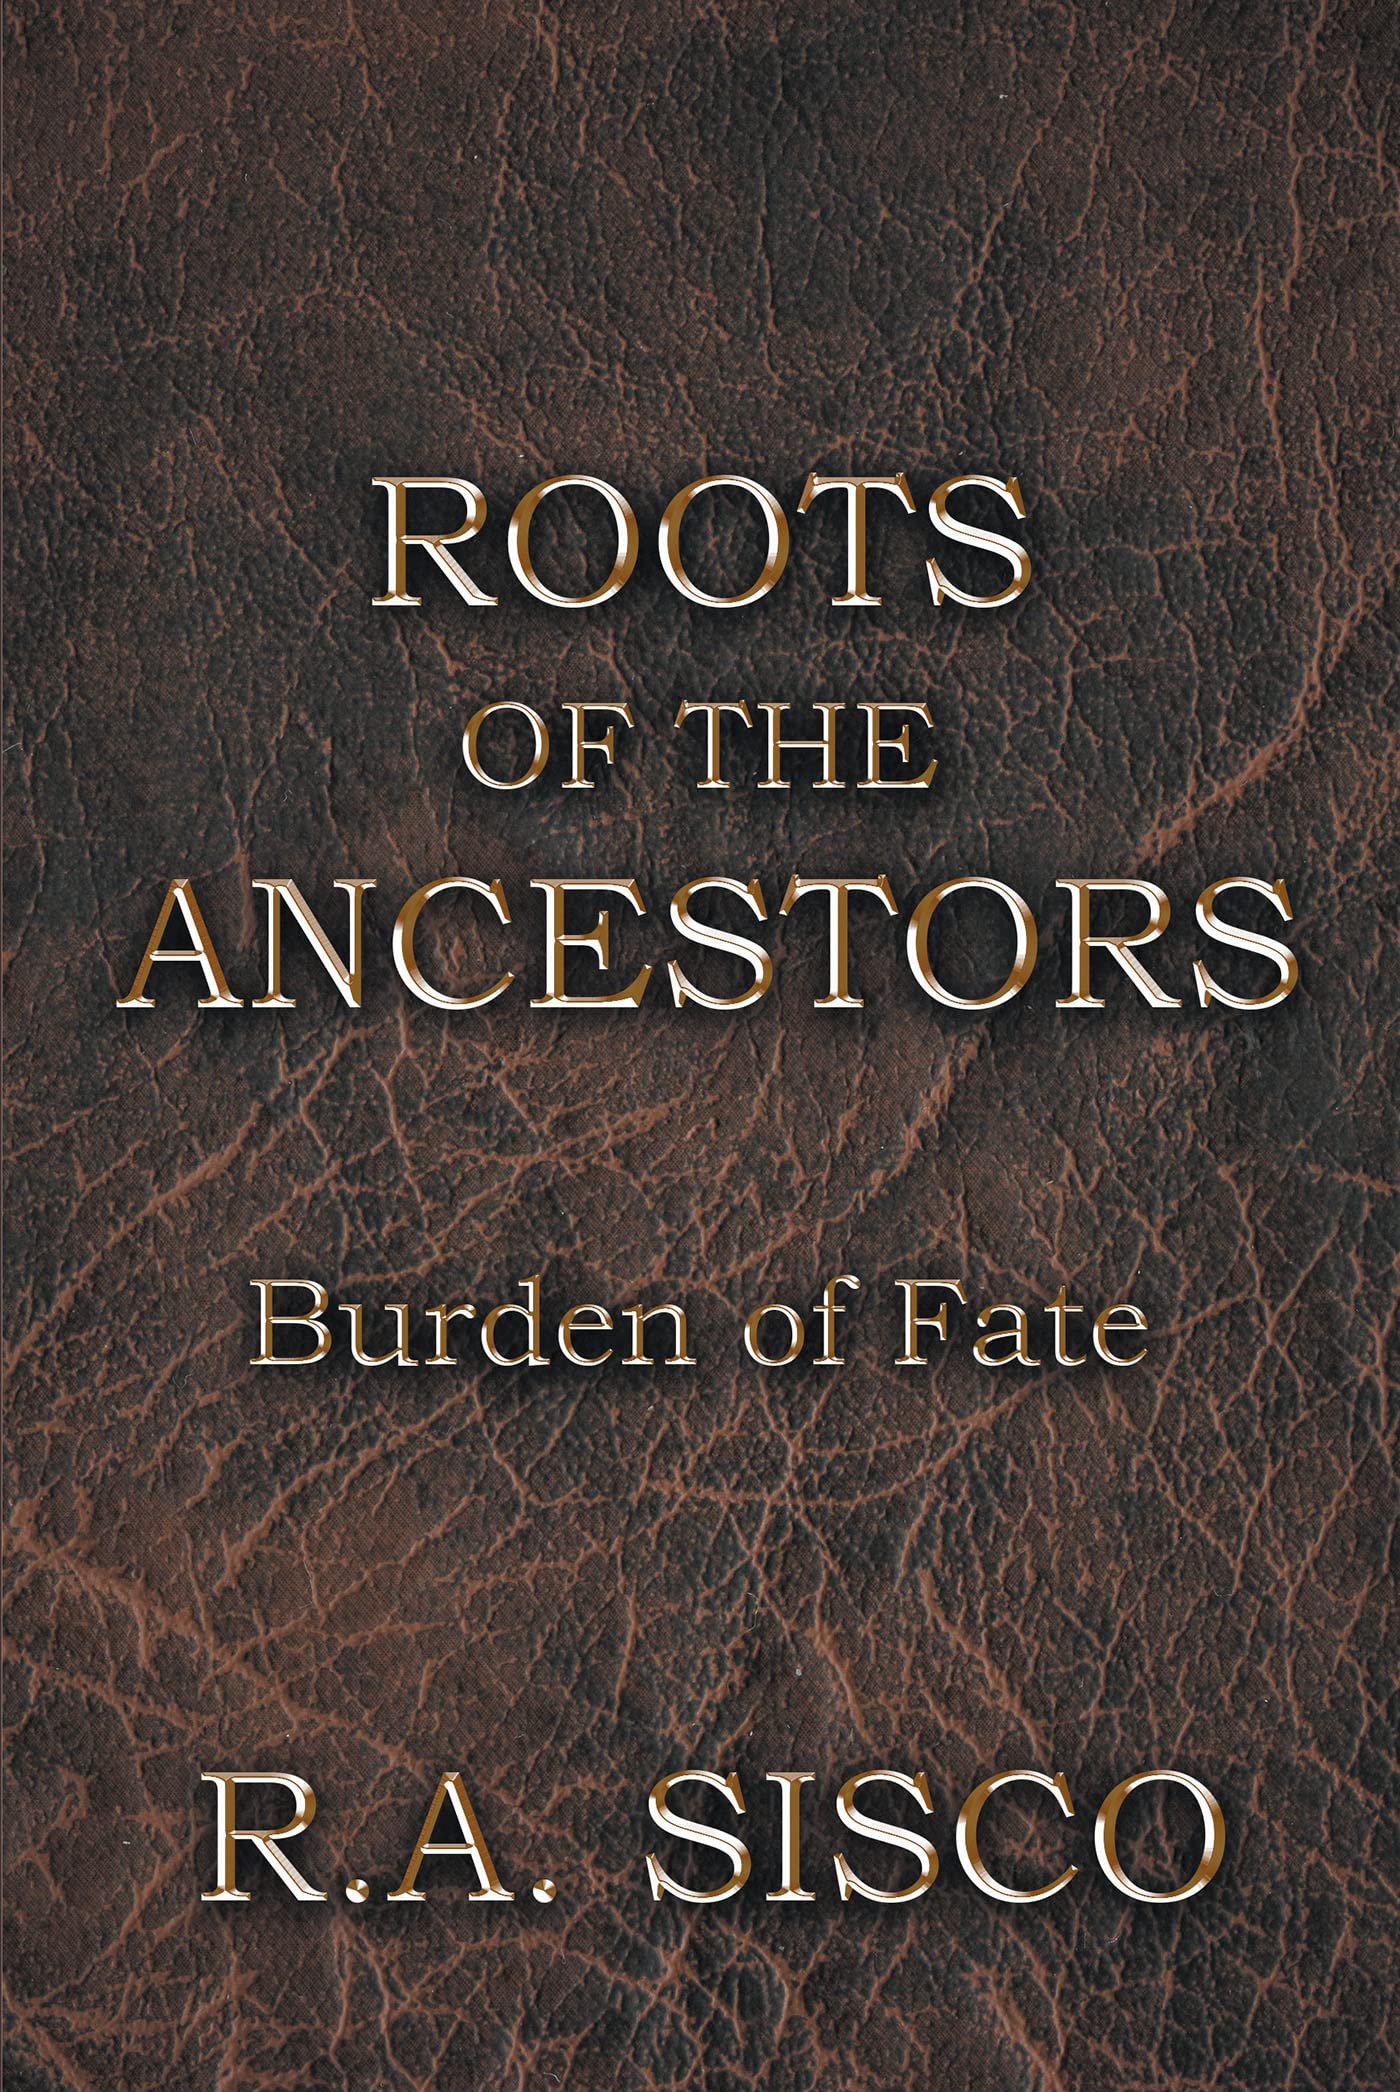 Roots of the Ancestors: Burden of Fate